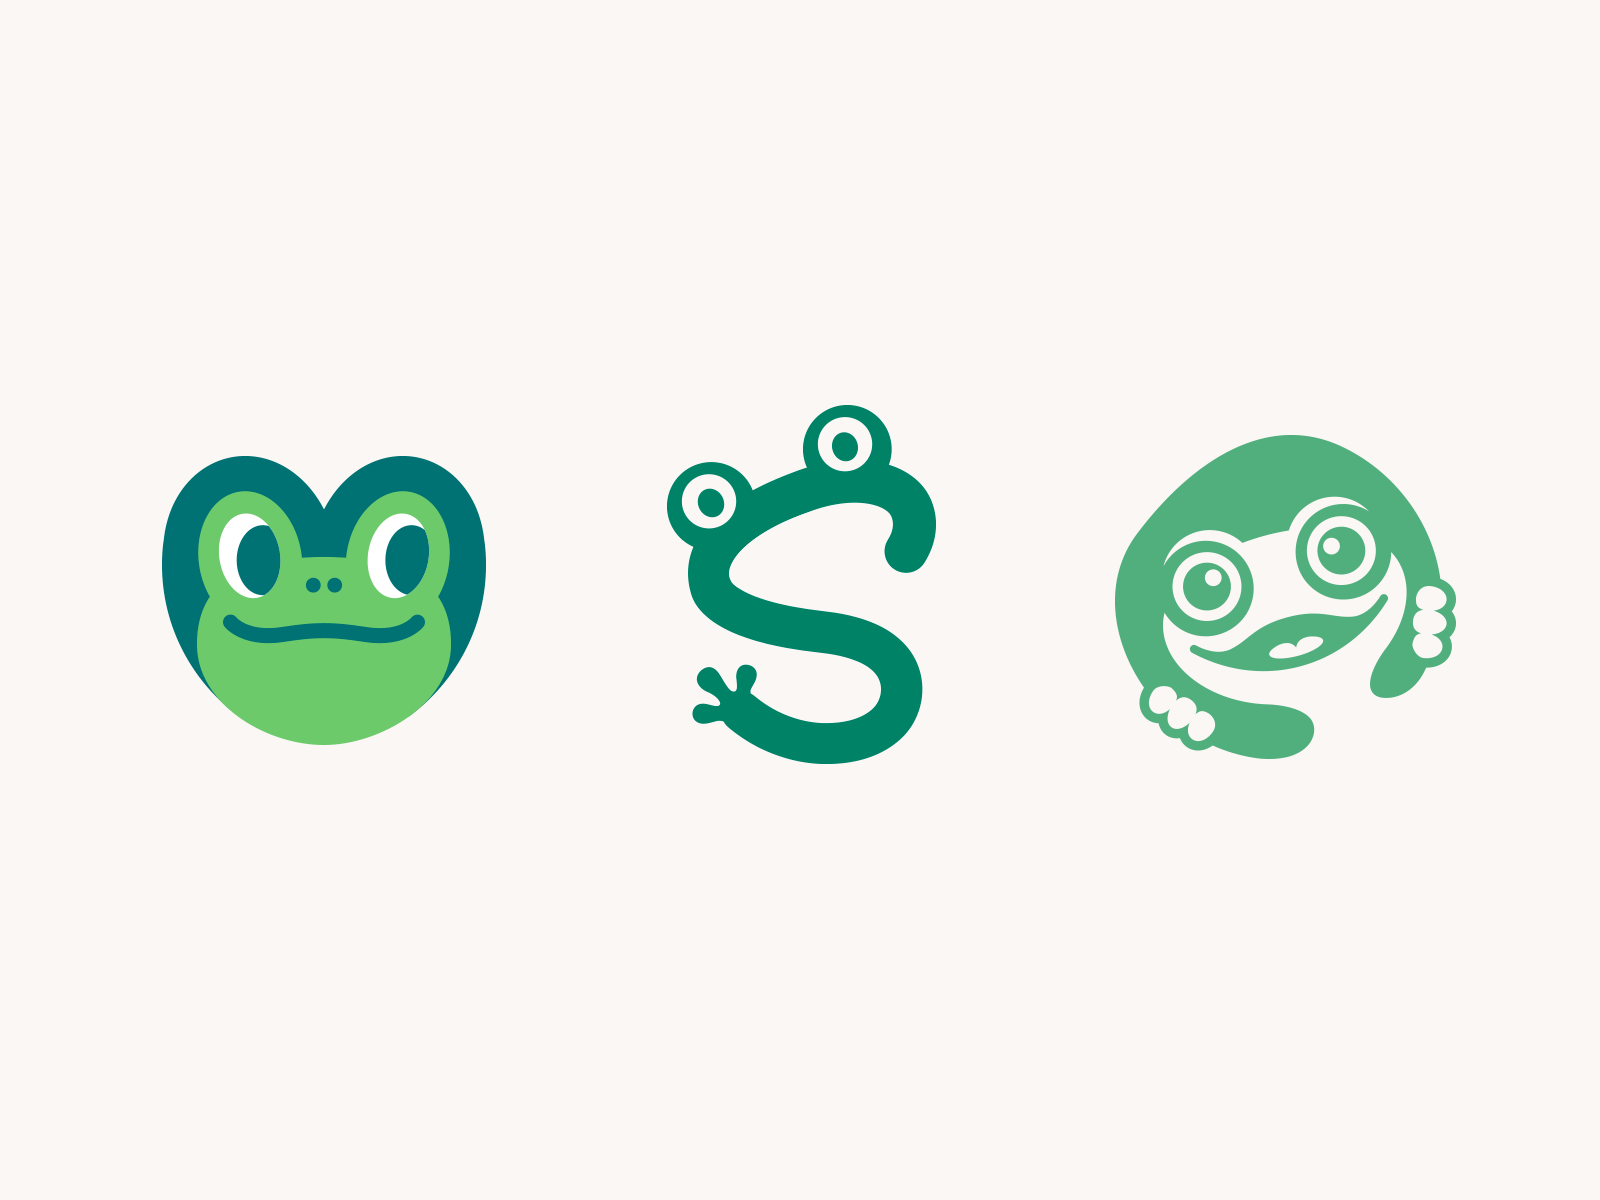 Frog designs concept